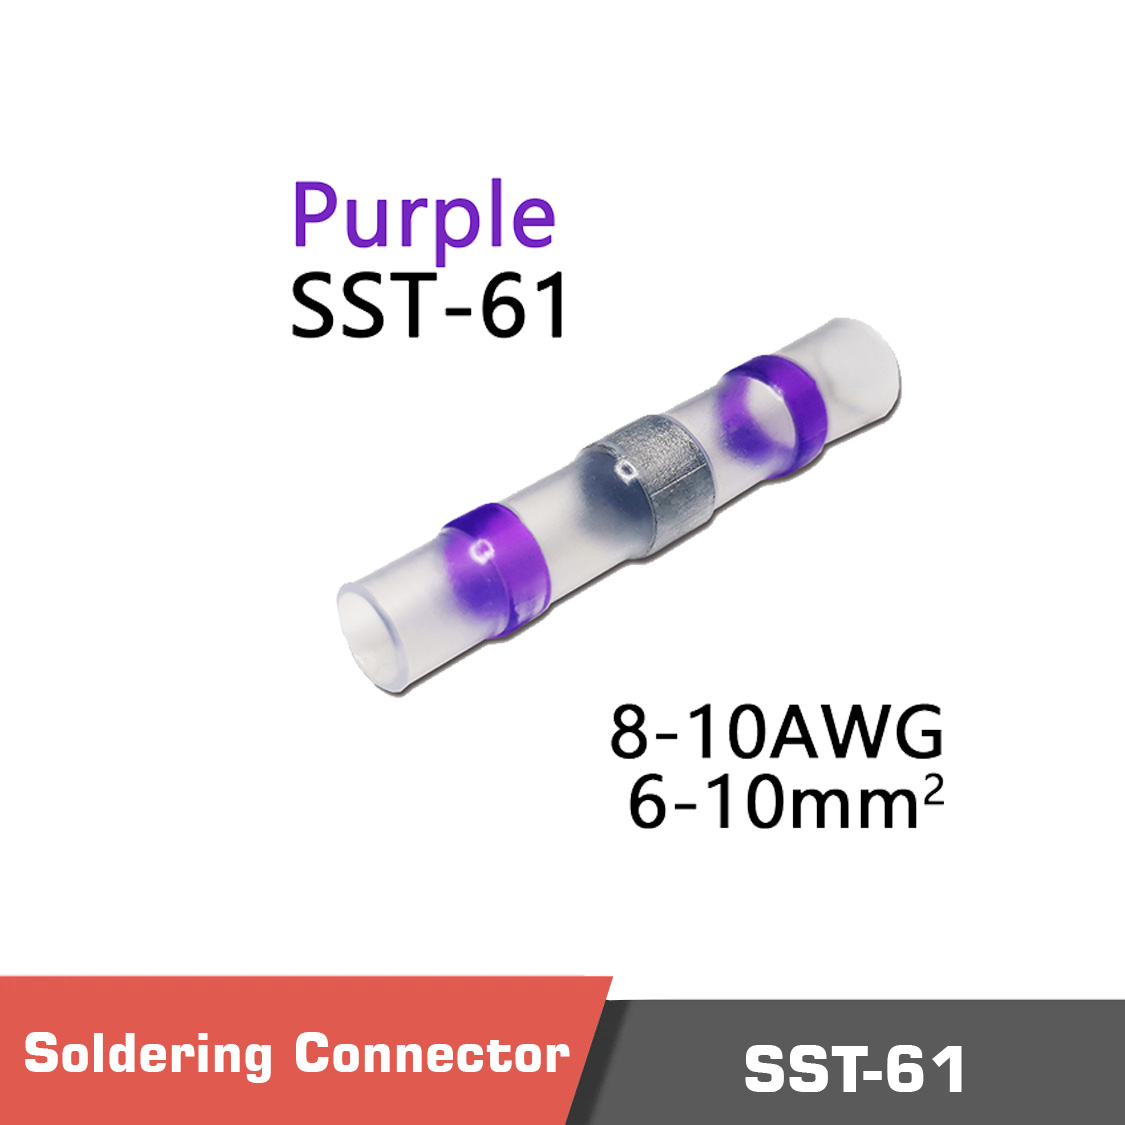 SST 61 - SST-71,SST-71 Soldering Connector,Soldering Connector - MotioNew - 1